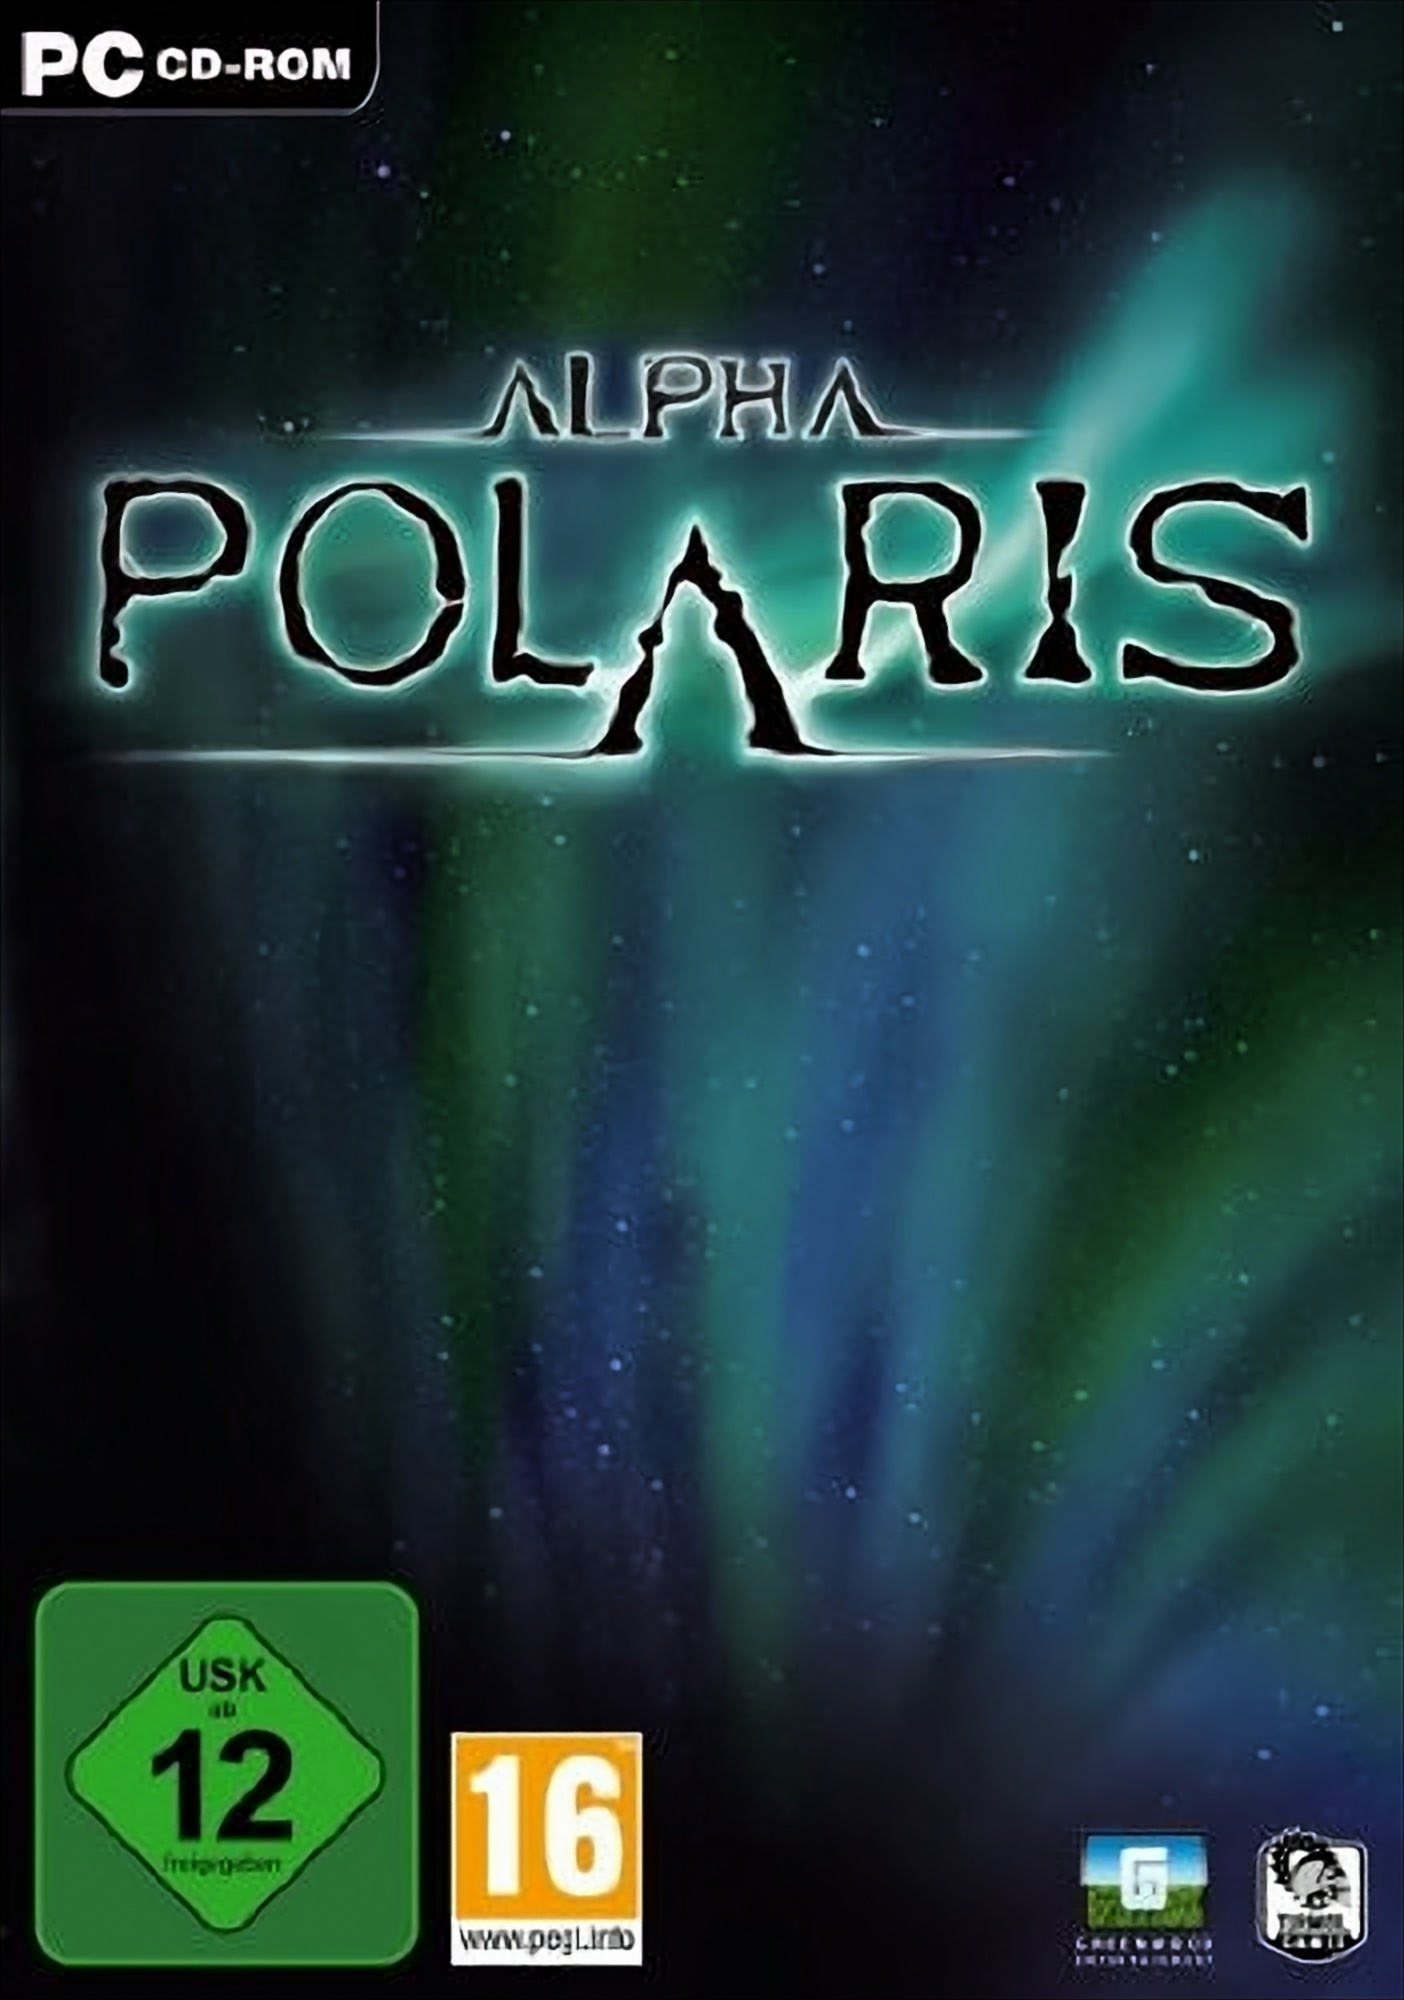 Polaris [PC] - Alpha